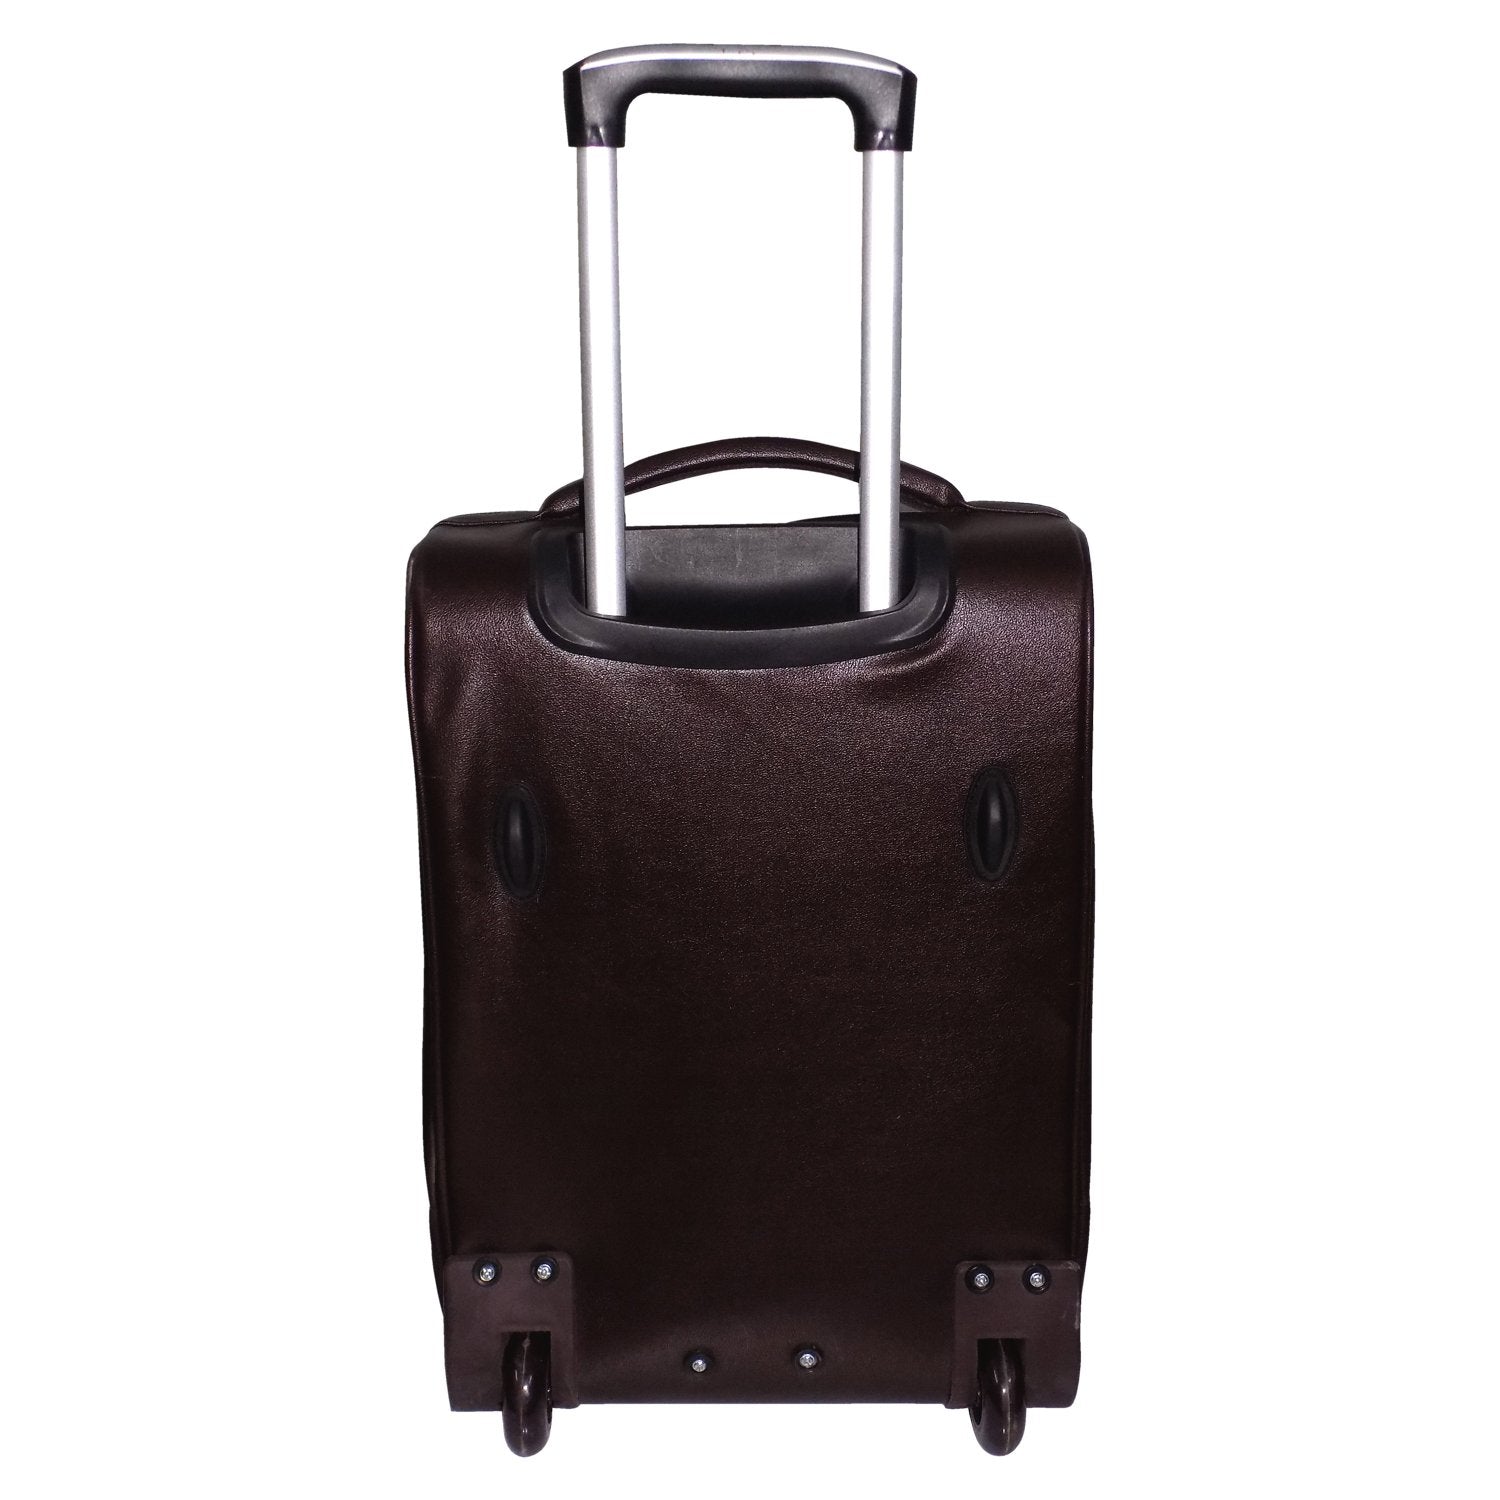 1156 18 inch Travel Trolly Bag for Men & Women - SkyShopy